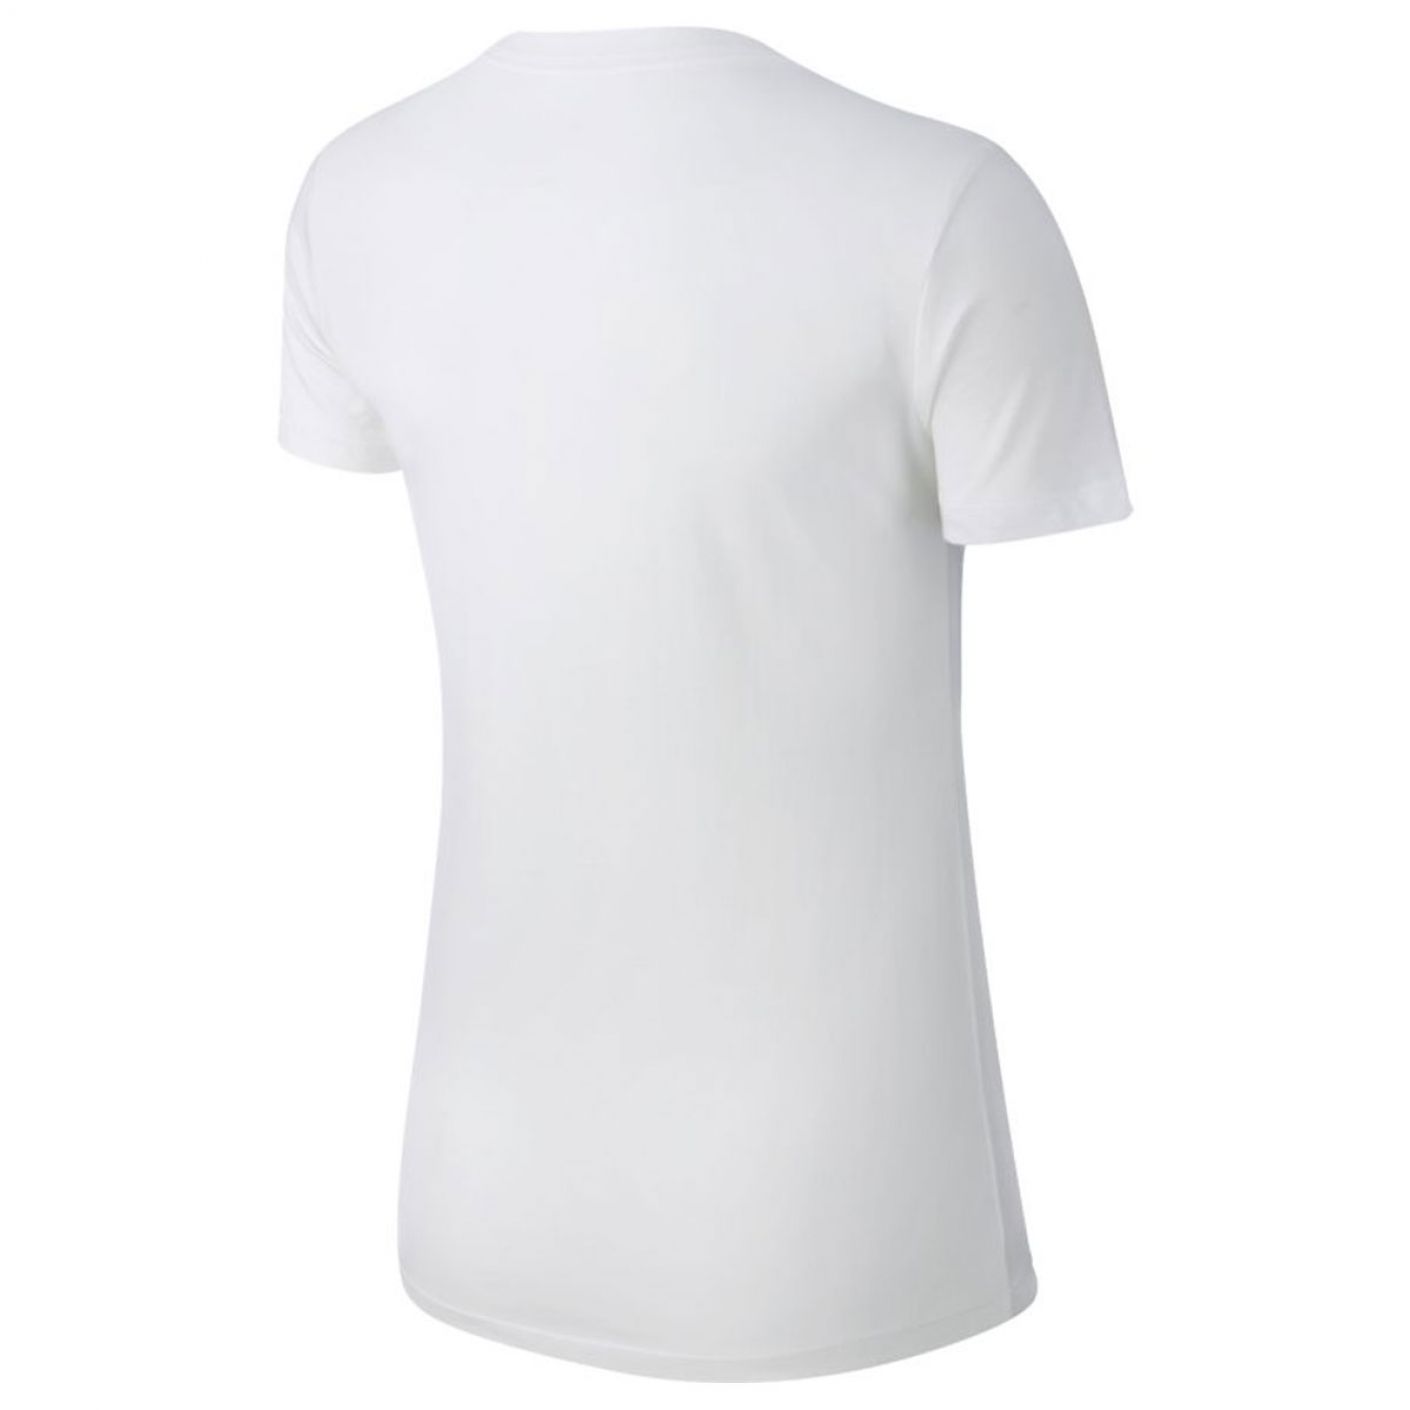 Nike Women's Essential White Sportswear T-Shirt